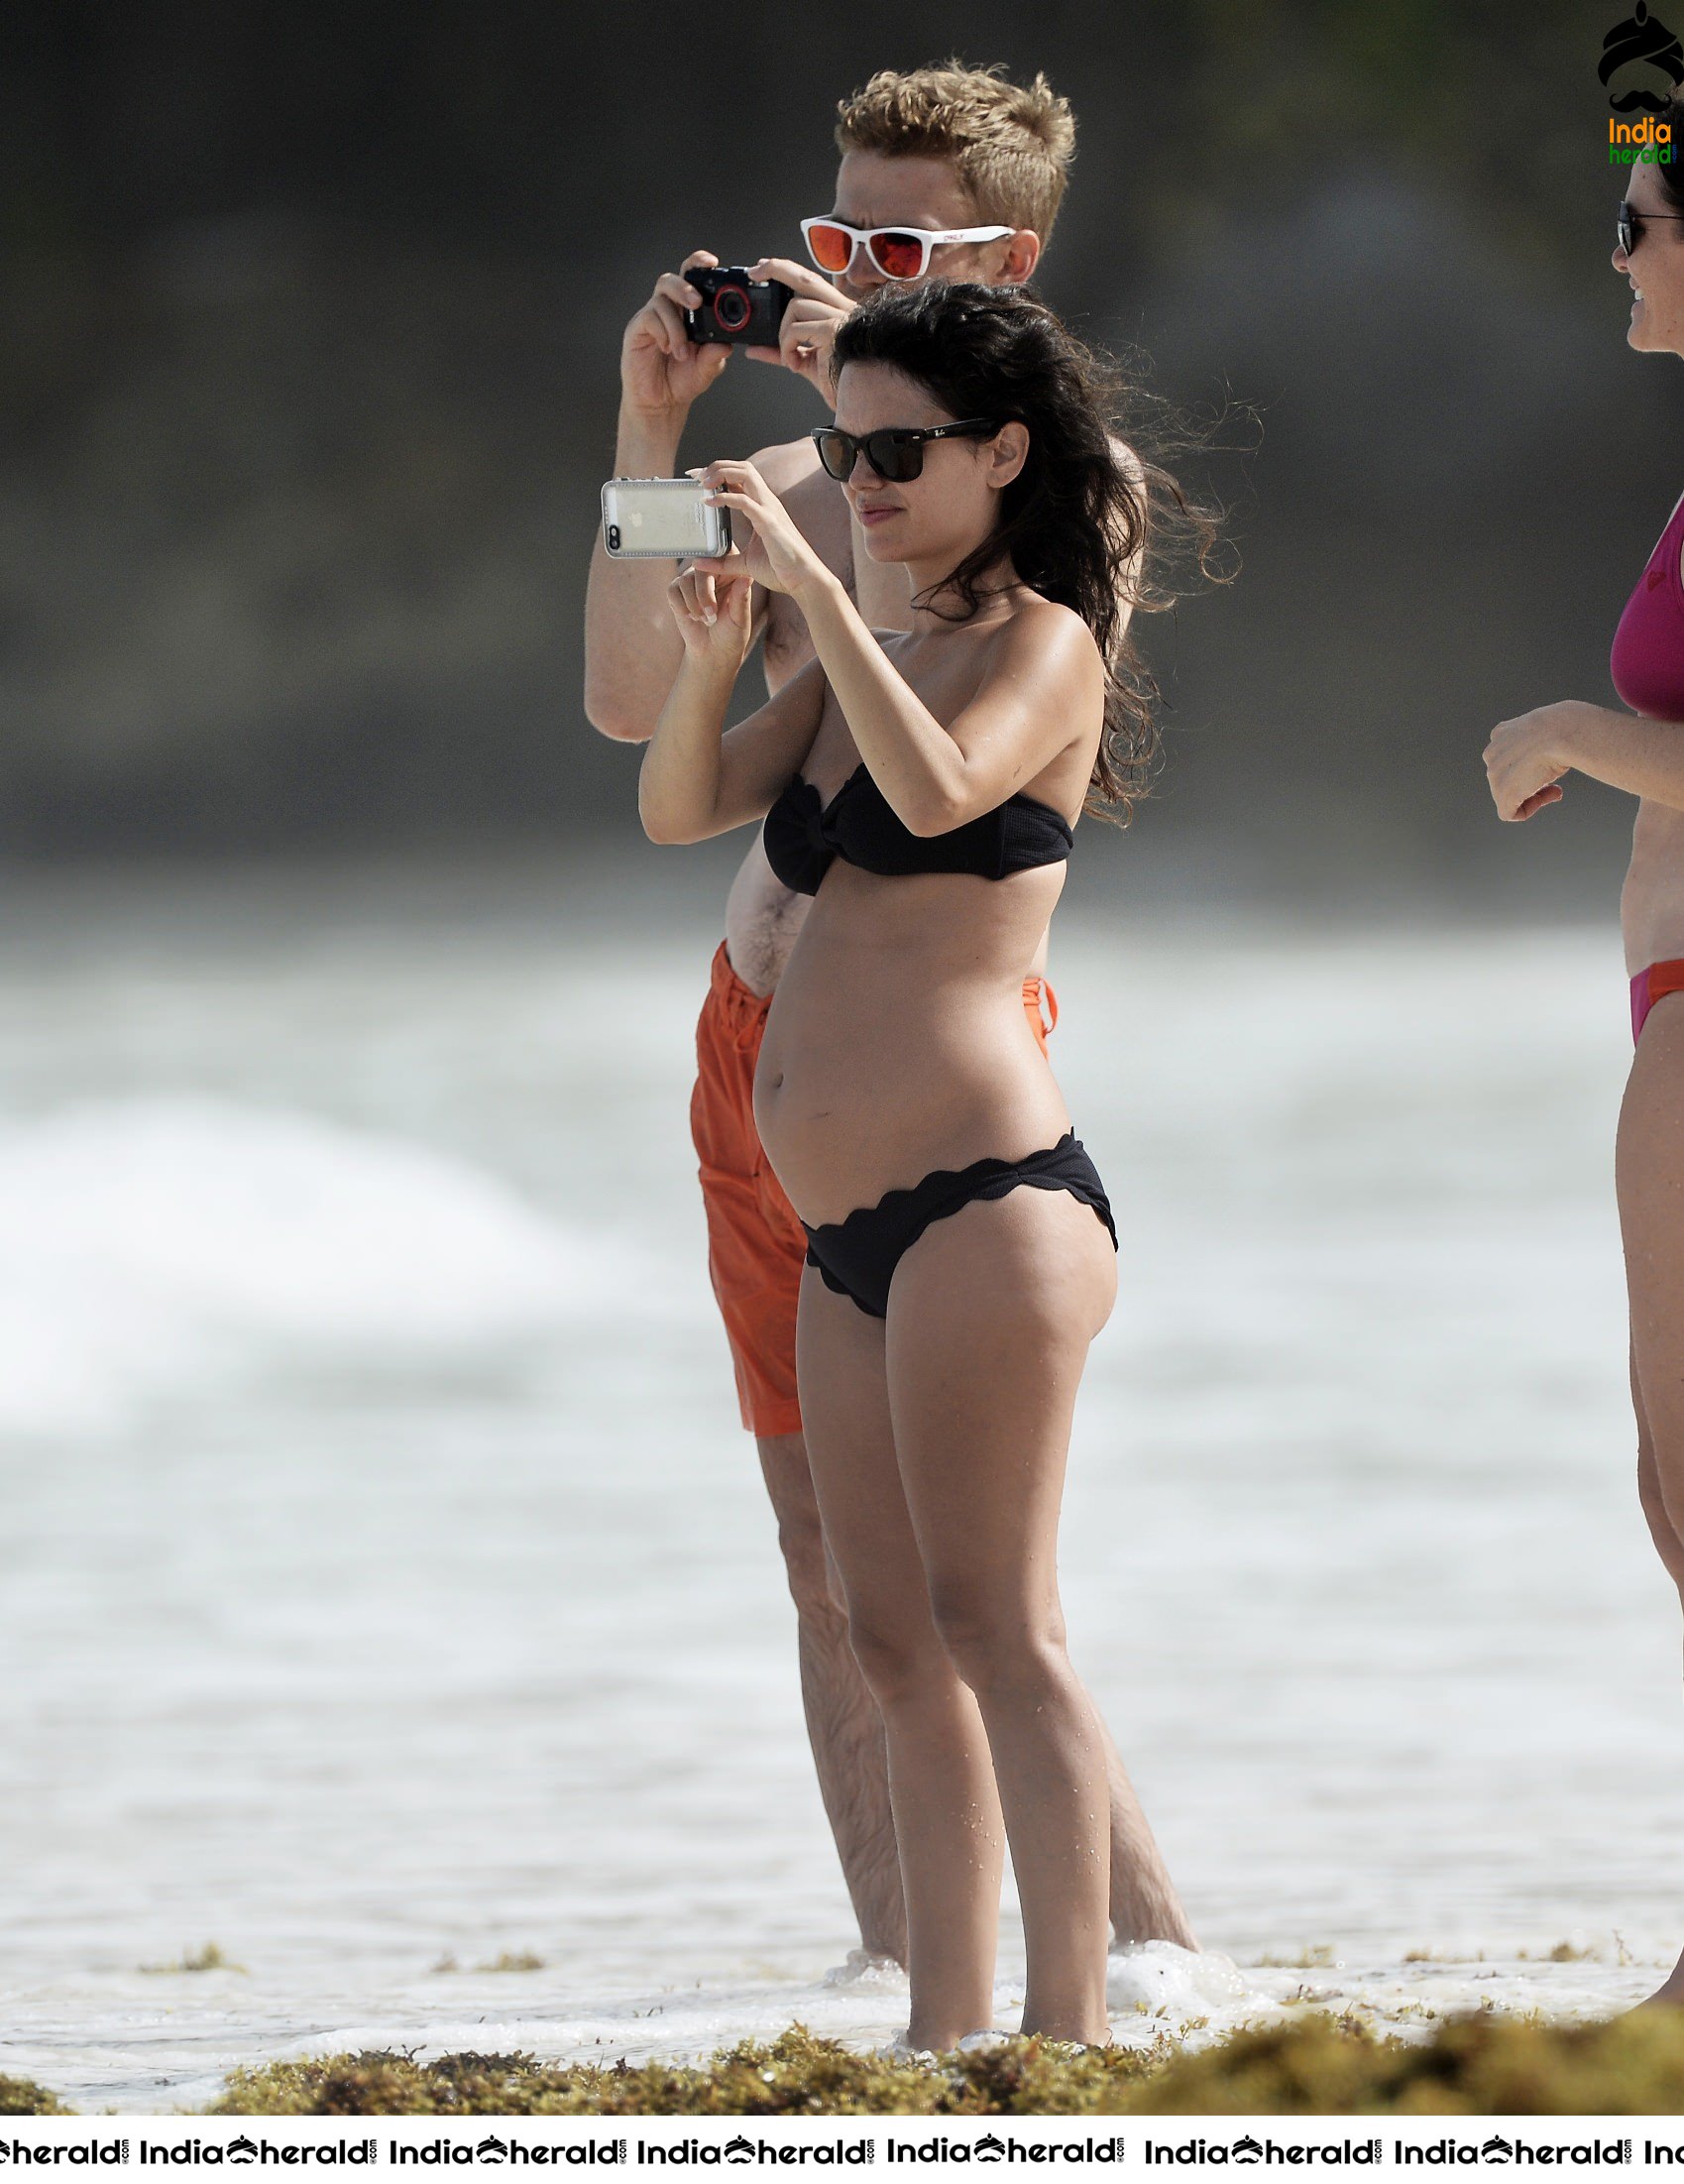 Rachel Bilson wearing a Black Bikini and flaunting her bump at a beach in Barbados Set 2